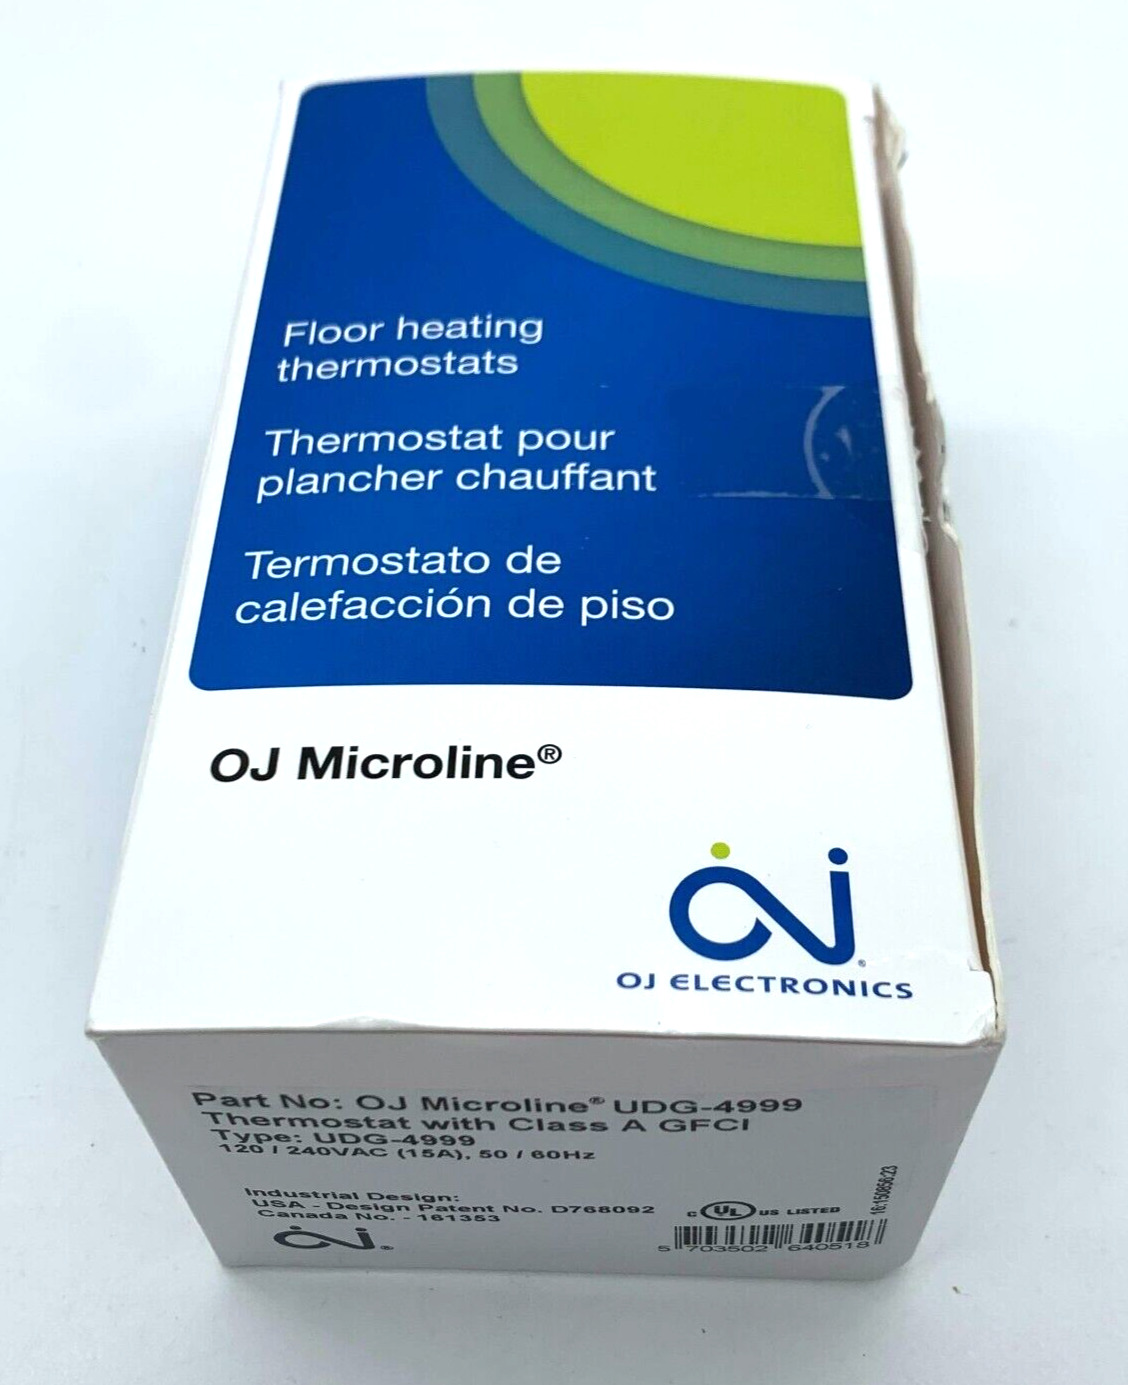 OJ Electronics OJ Microline Programmable Thermostat Model UDG-4999